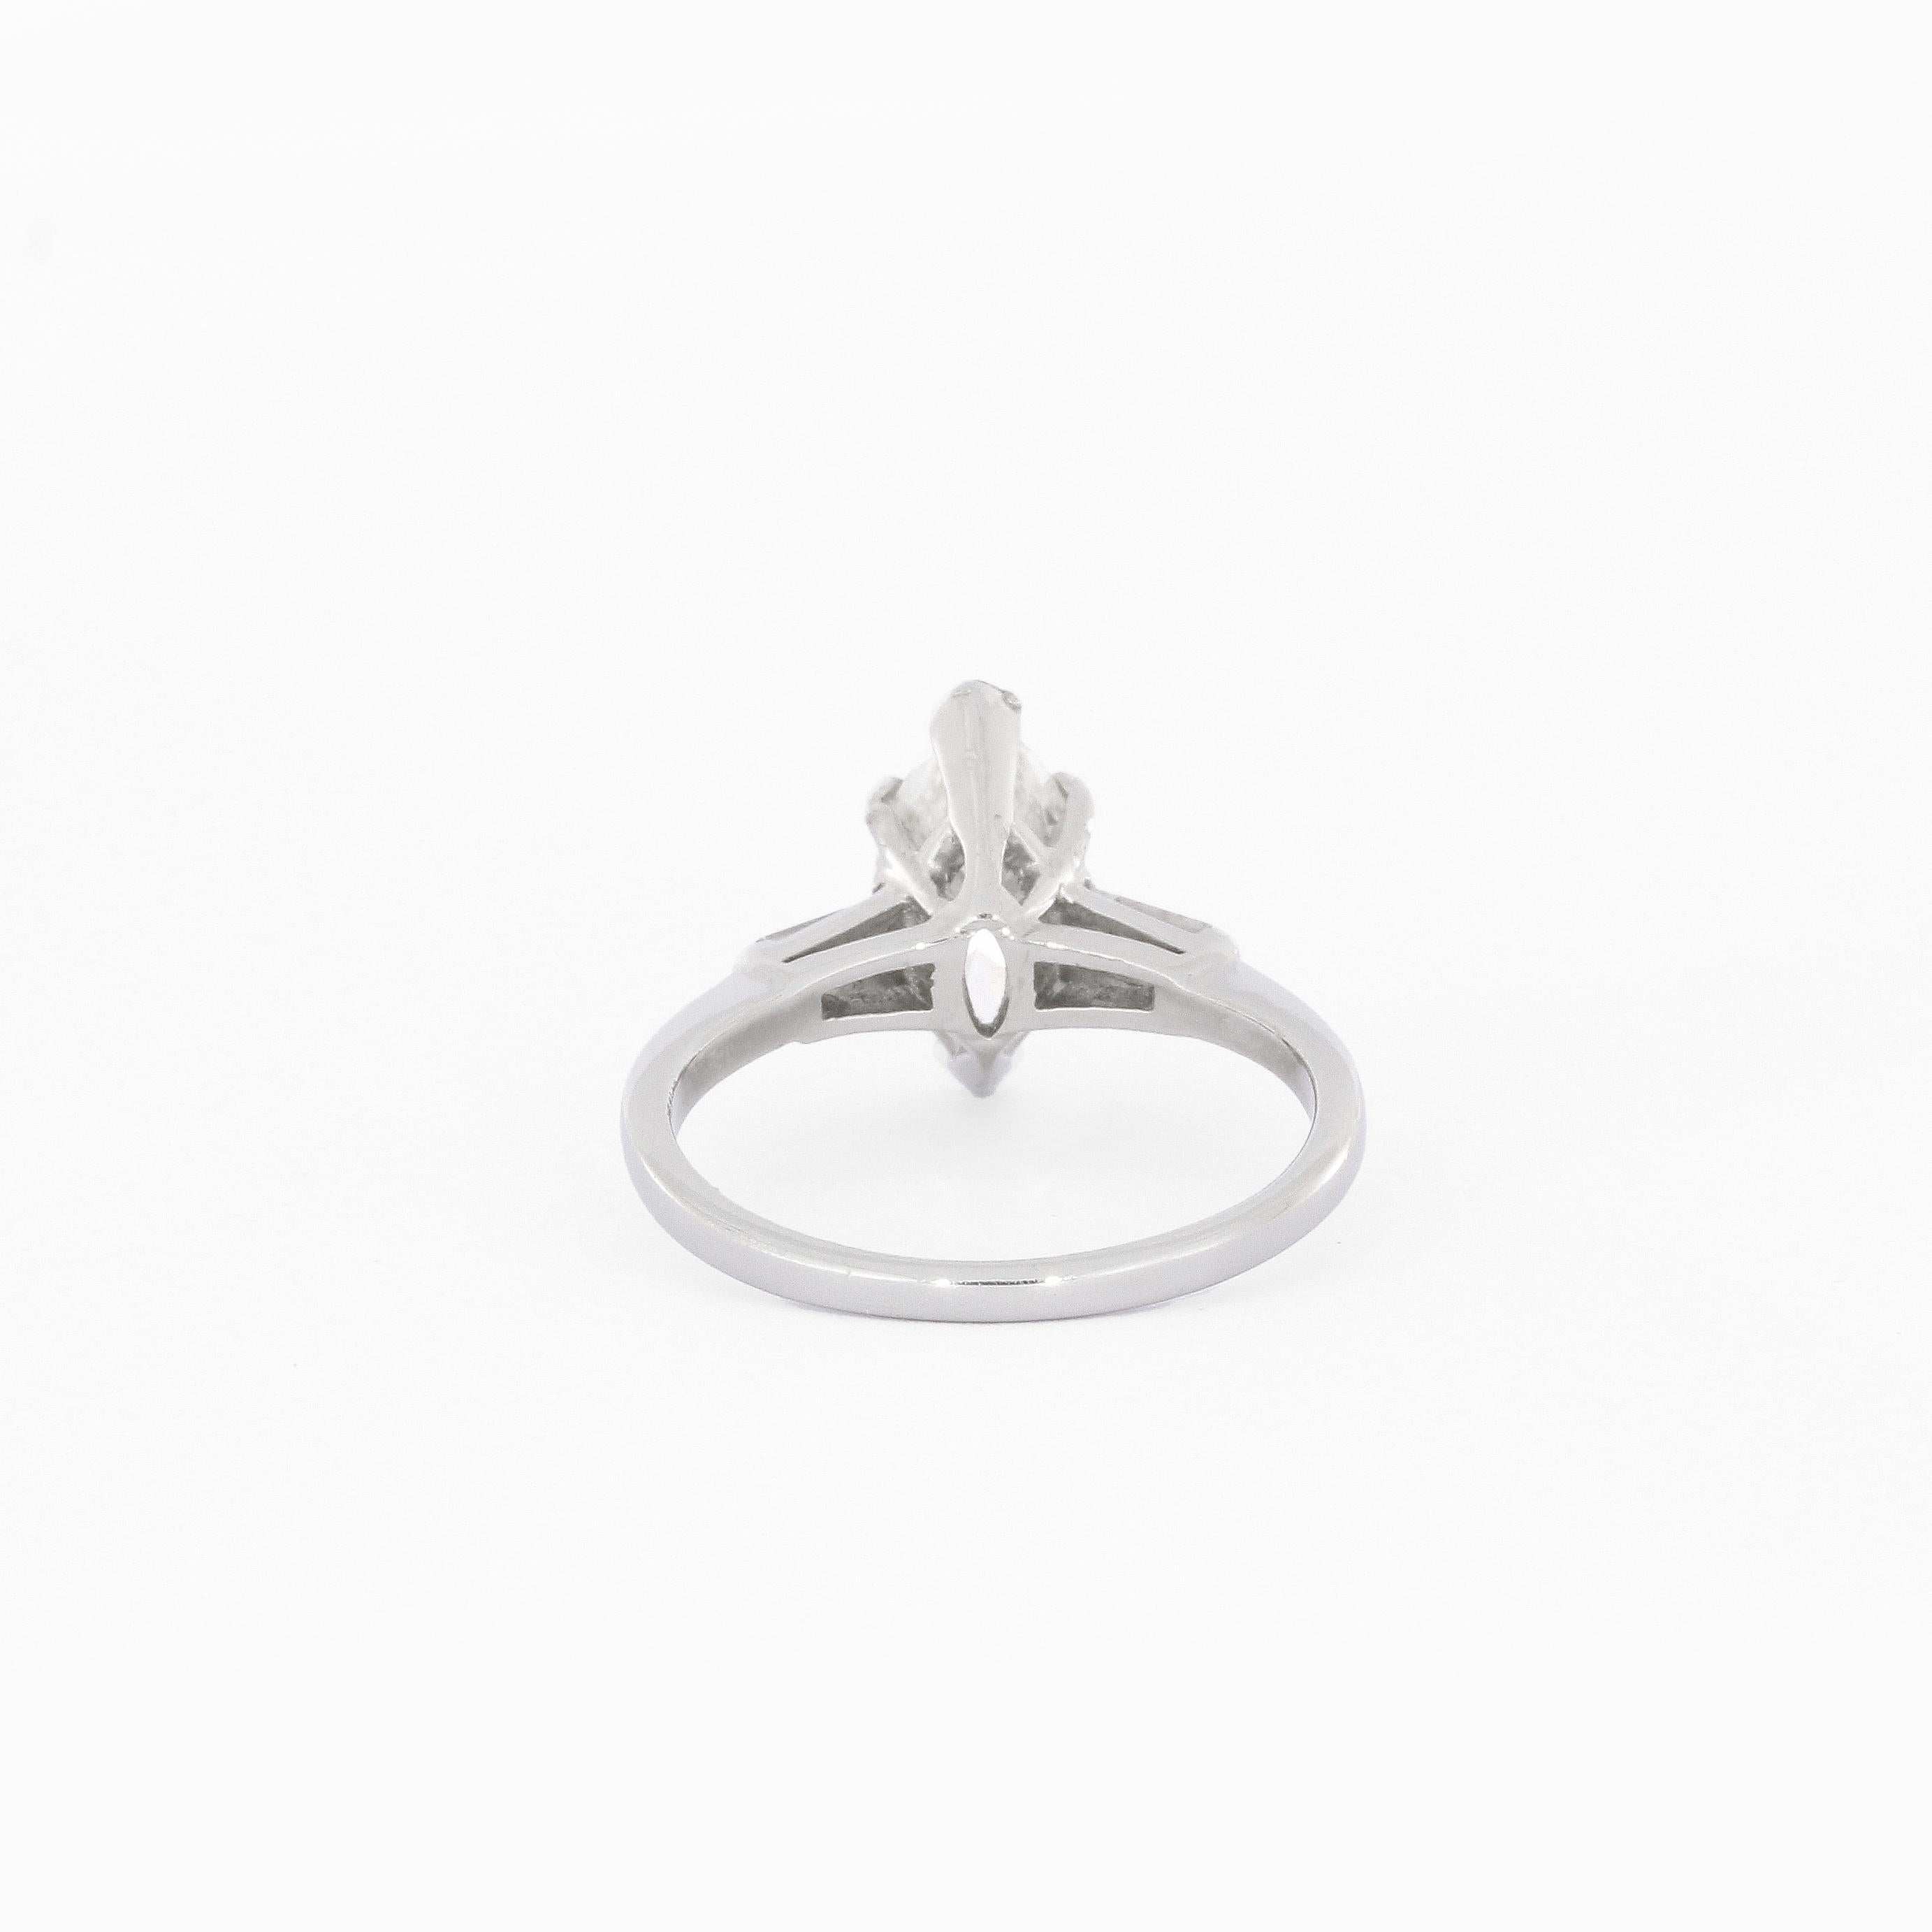 Women's Marquise Cut 1.01 Carat Diamond Solitaire Ring in Platinum For Sale